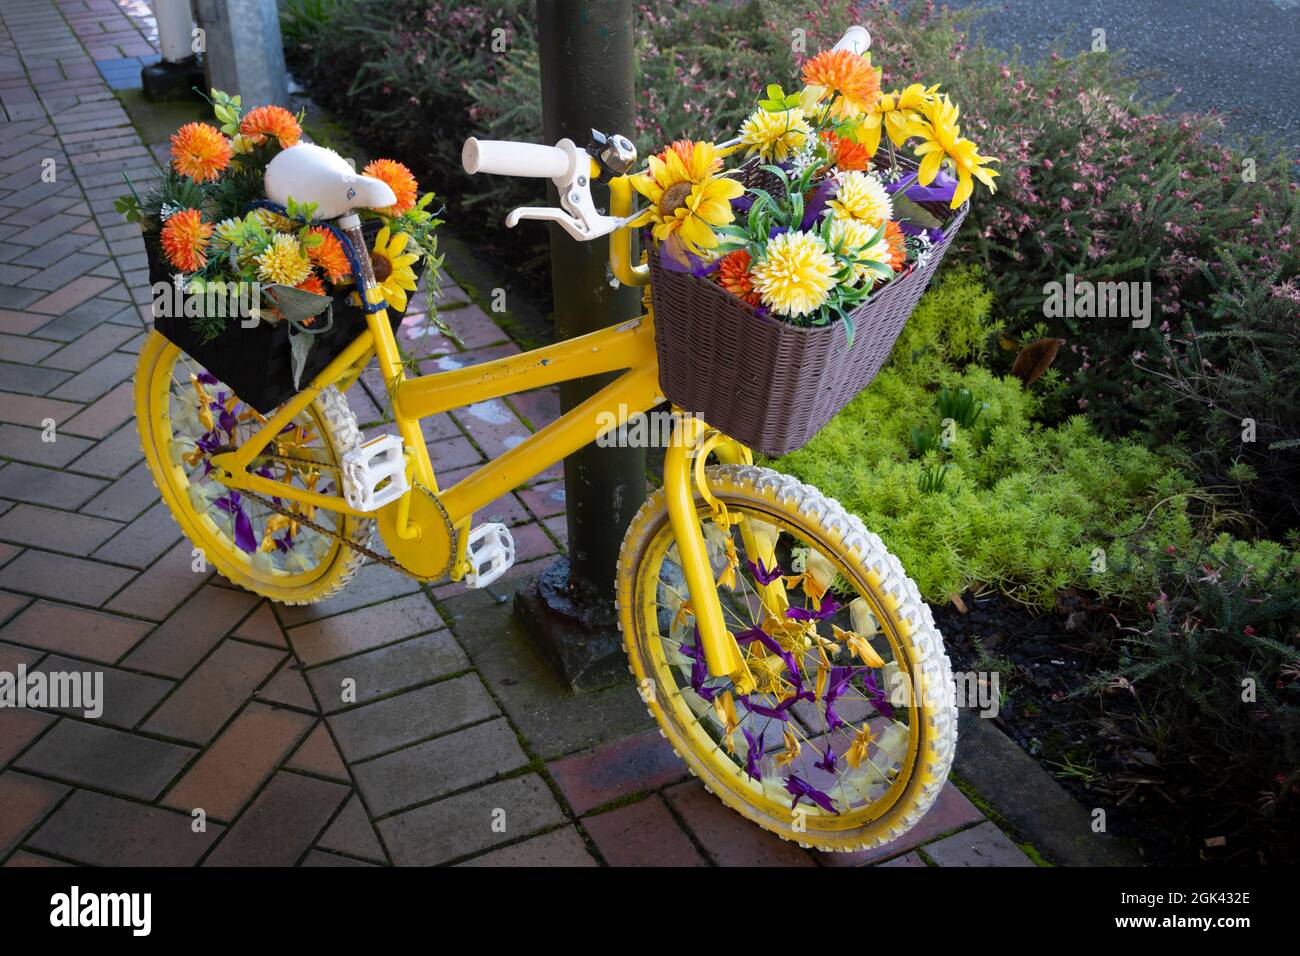 Yellow children's bike with flowers in baskets, Eltham, Taranaki, North Island, New Zealand Stock Photo